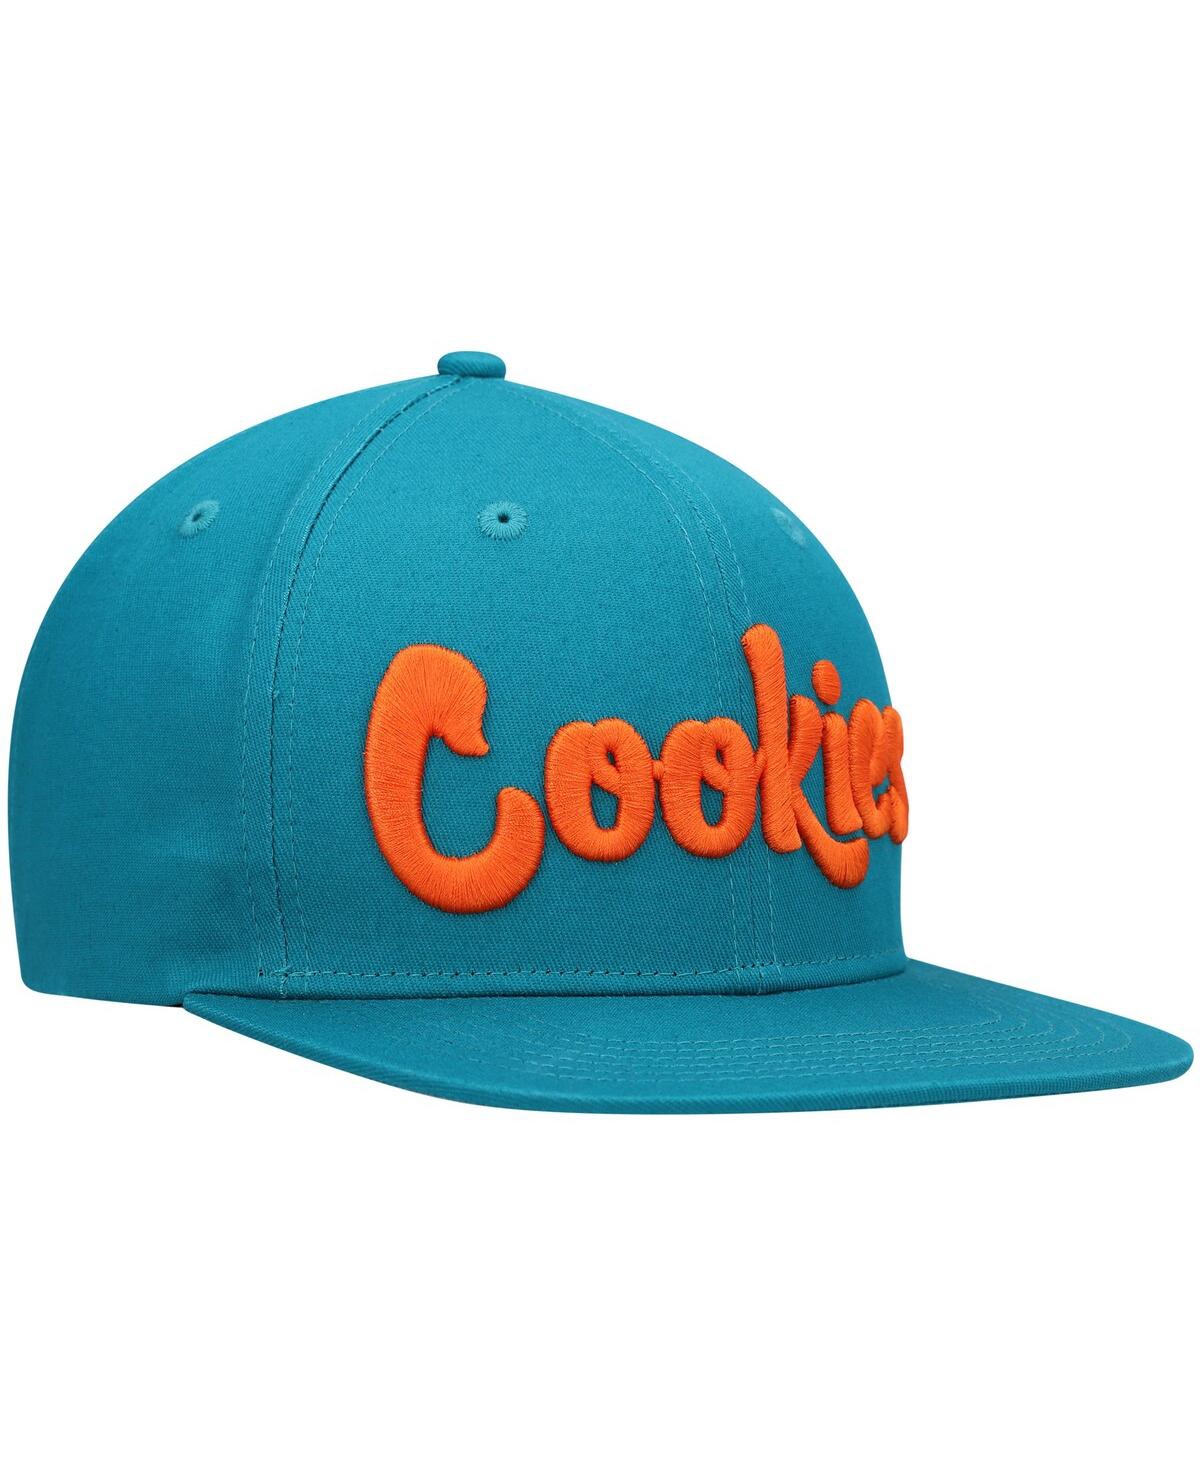 Shop Cookies Men's  Teal Original Mint Snapback Hat